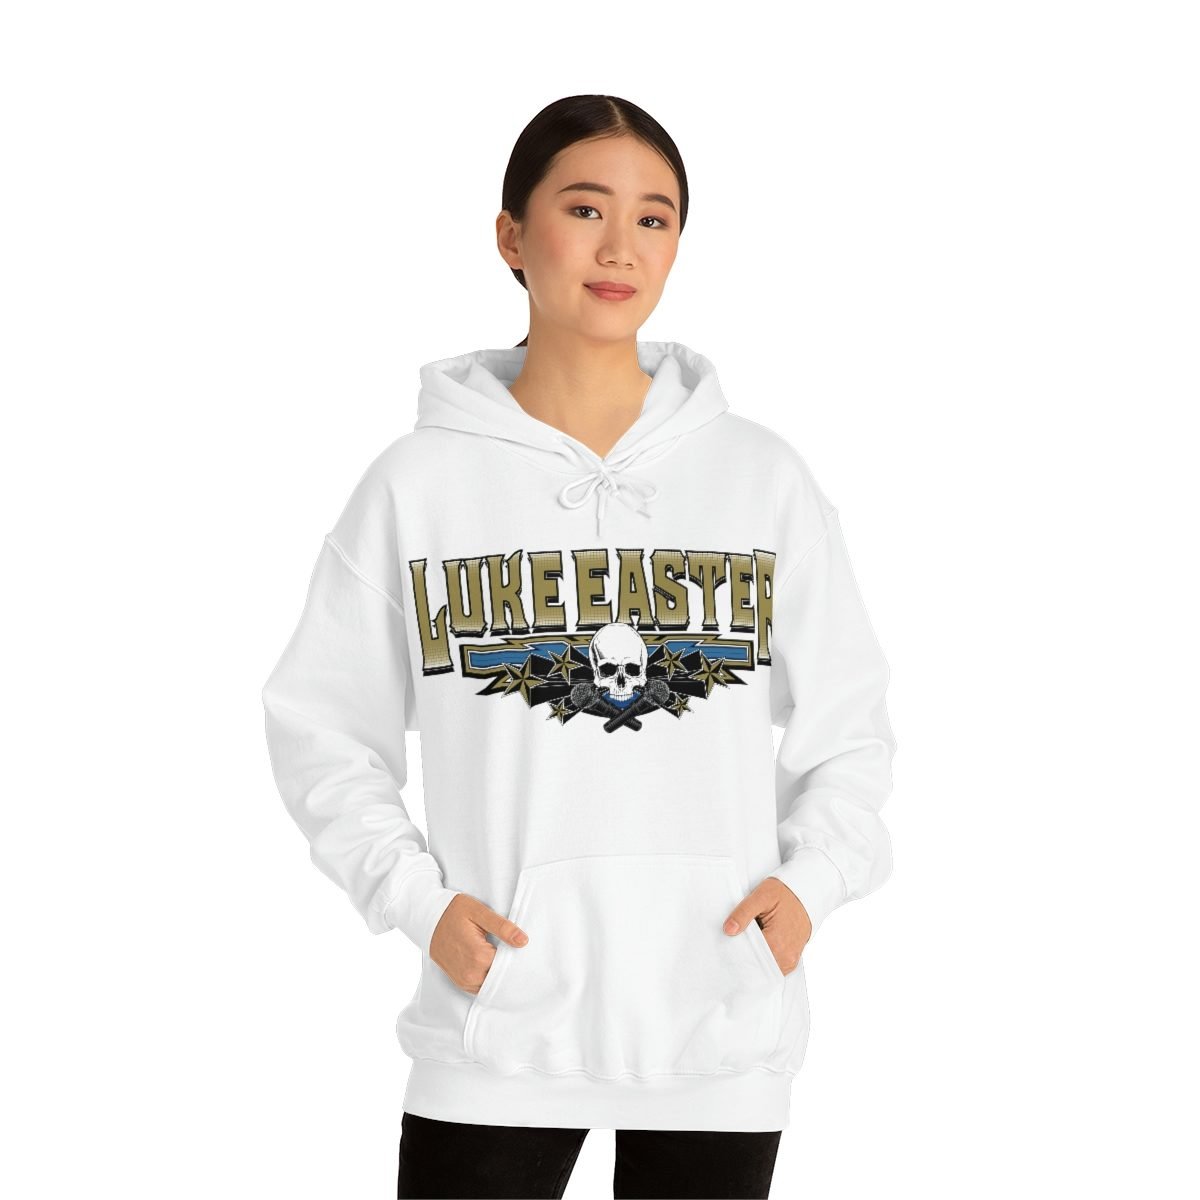 Luke Easter Skull and Mics Logo Pullover Hooded Sweatshirt